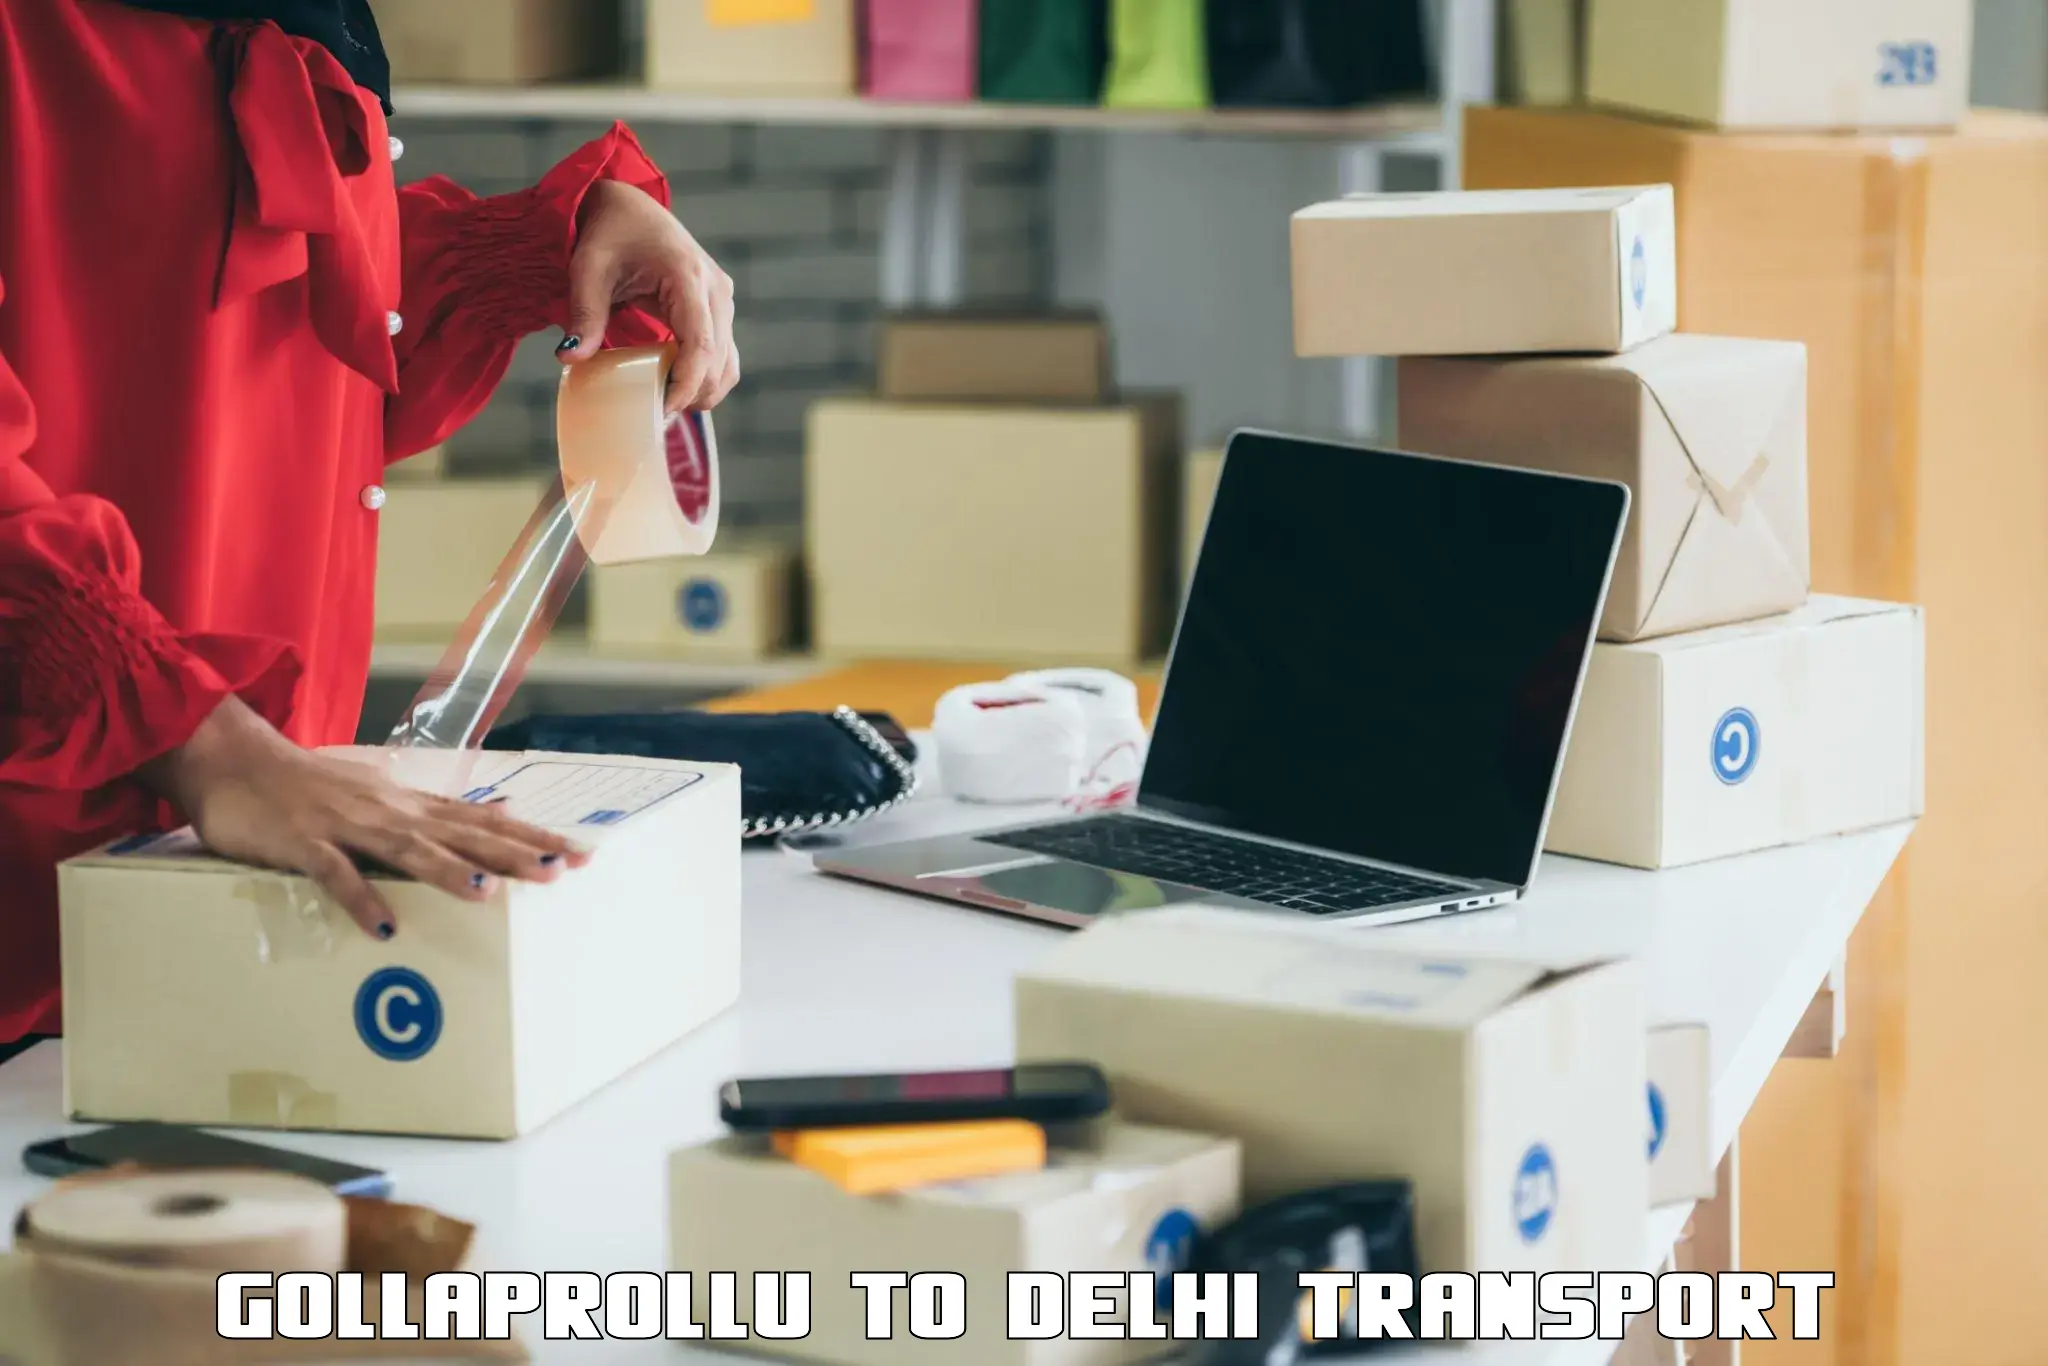 Bike transport service Gollaprollu to Delhi